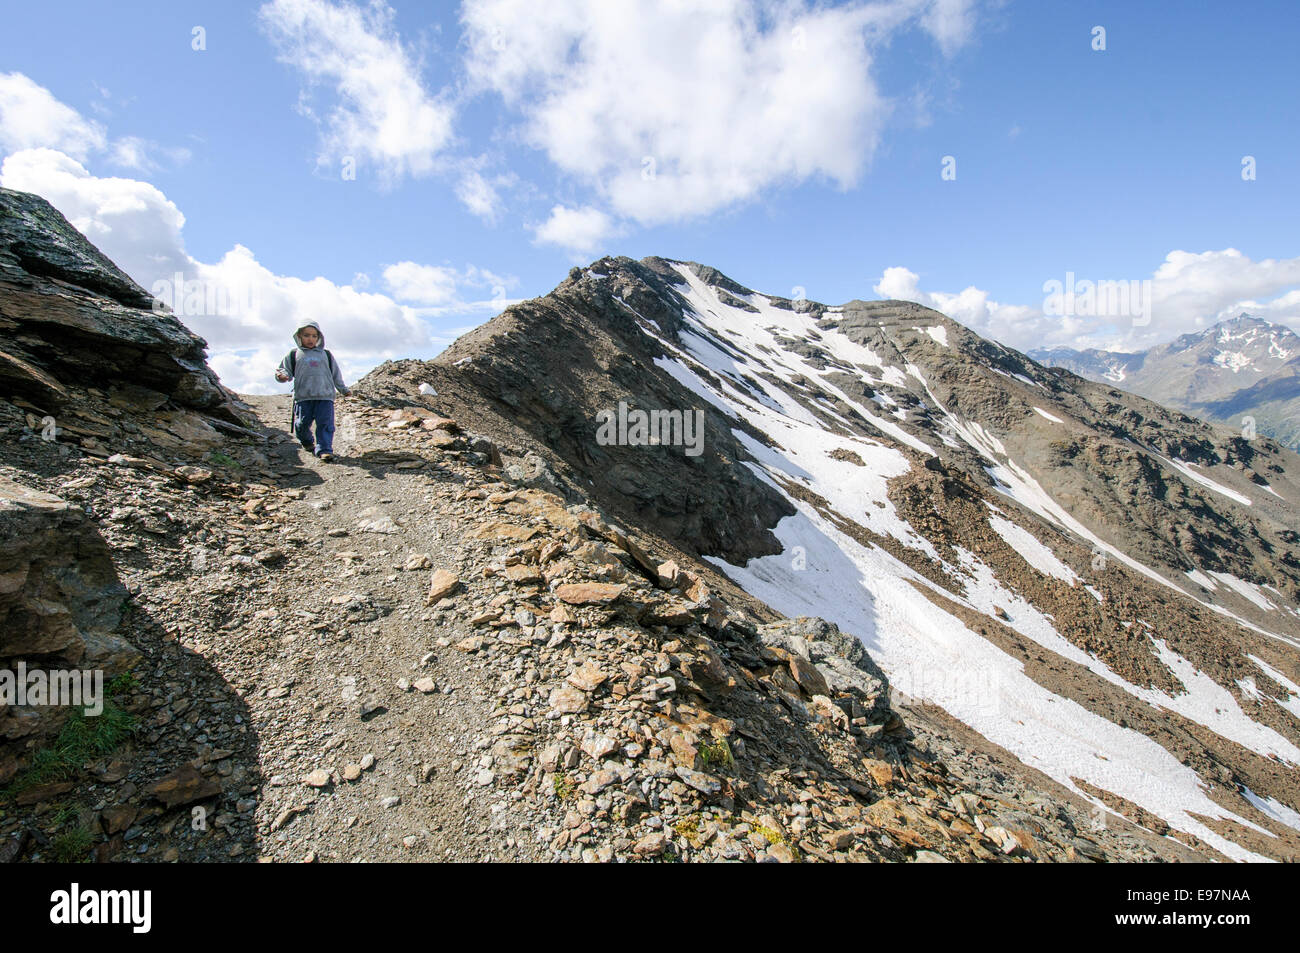 Alpine mountain peak in Bormio, Lombardy region of the Alps in northern Italy Stock Photo